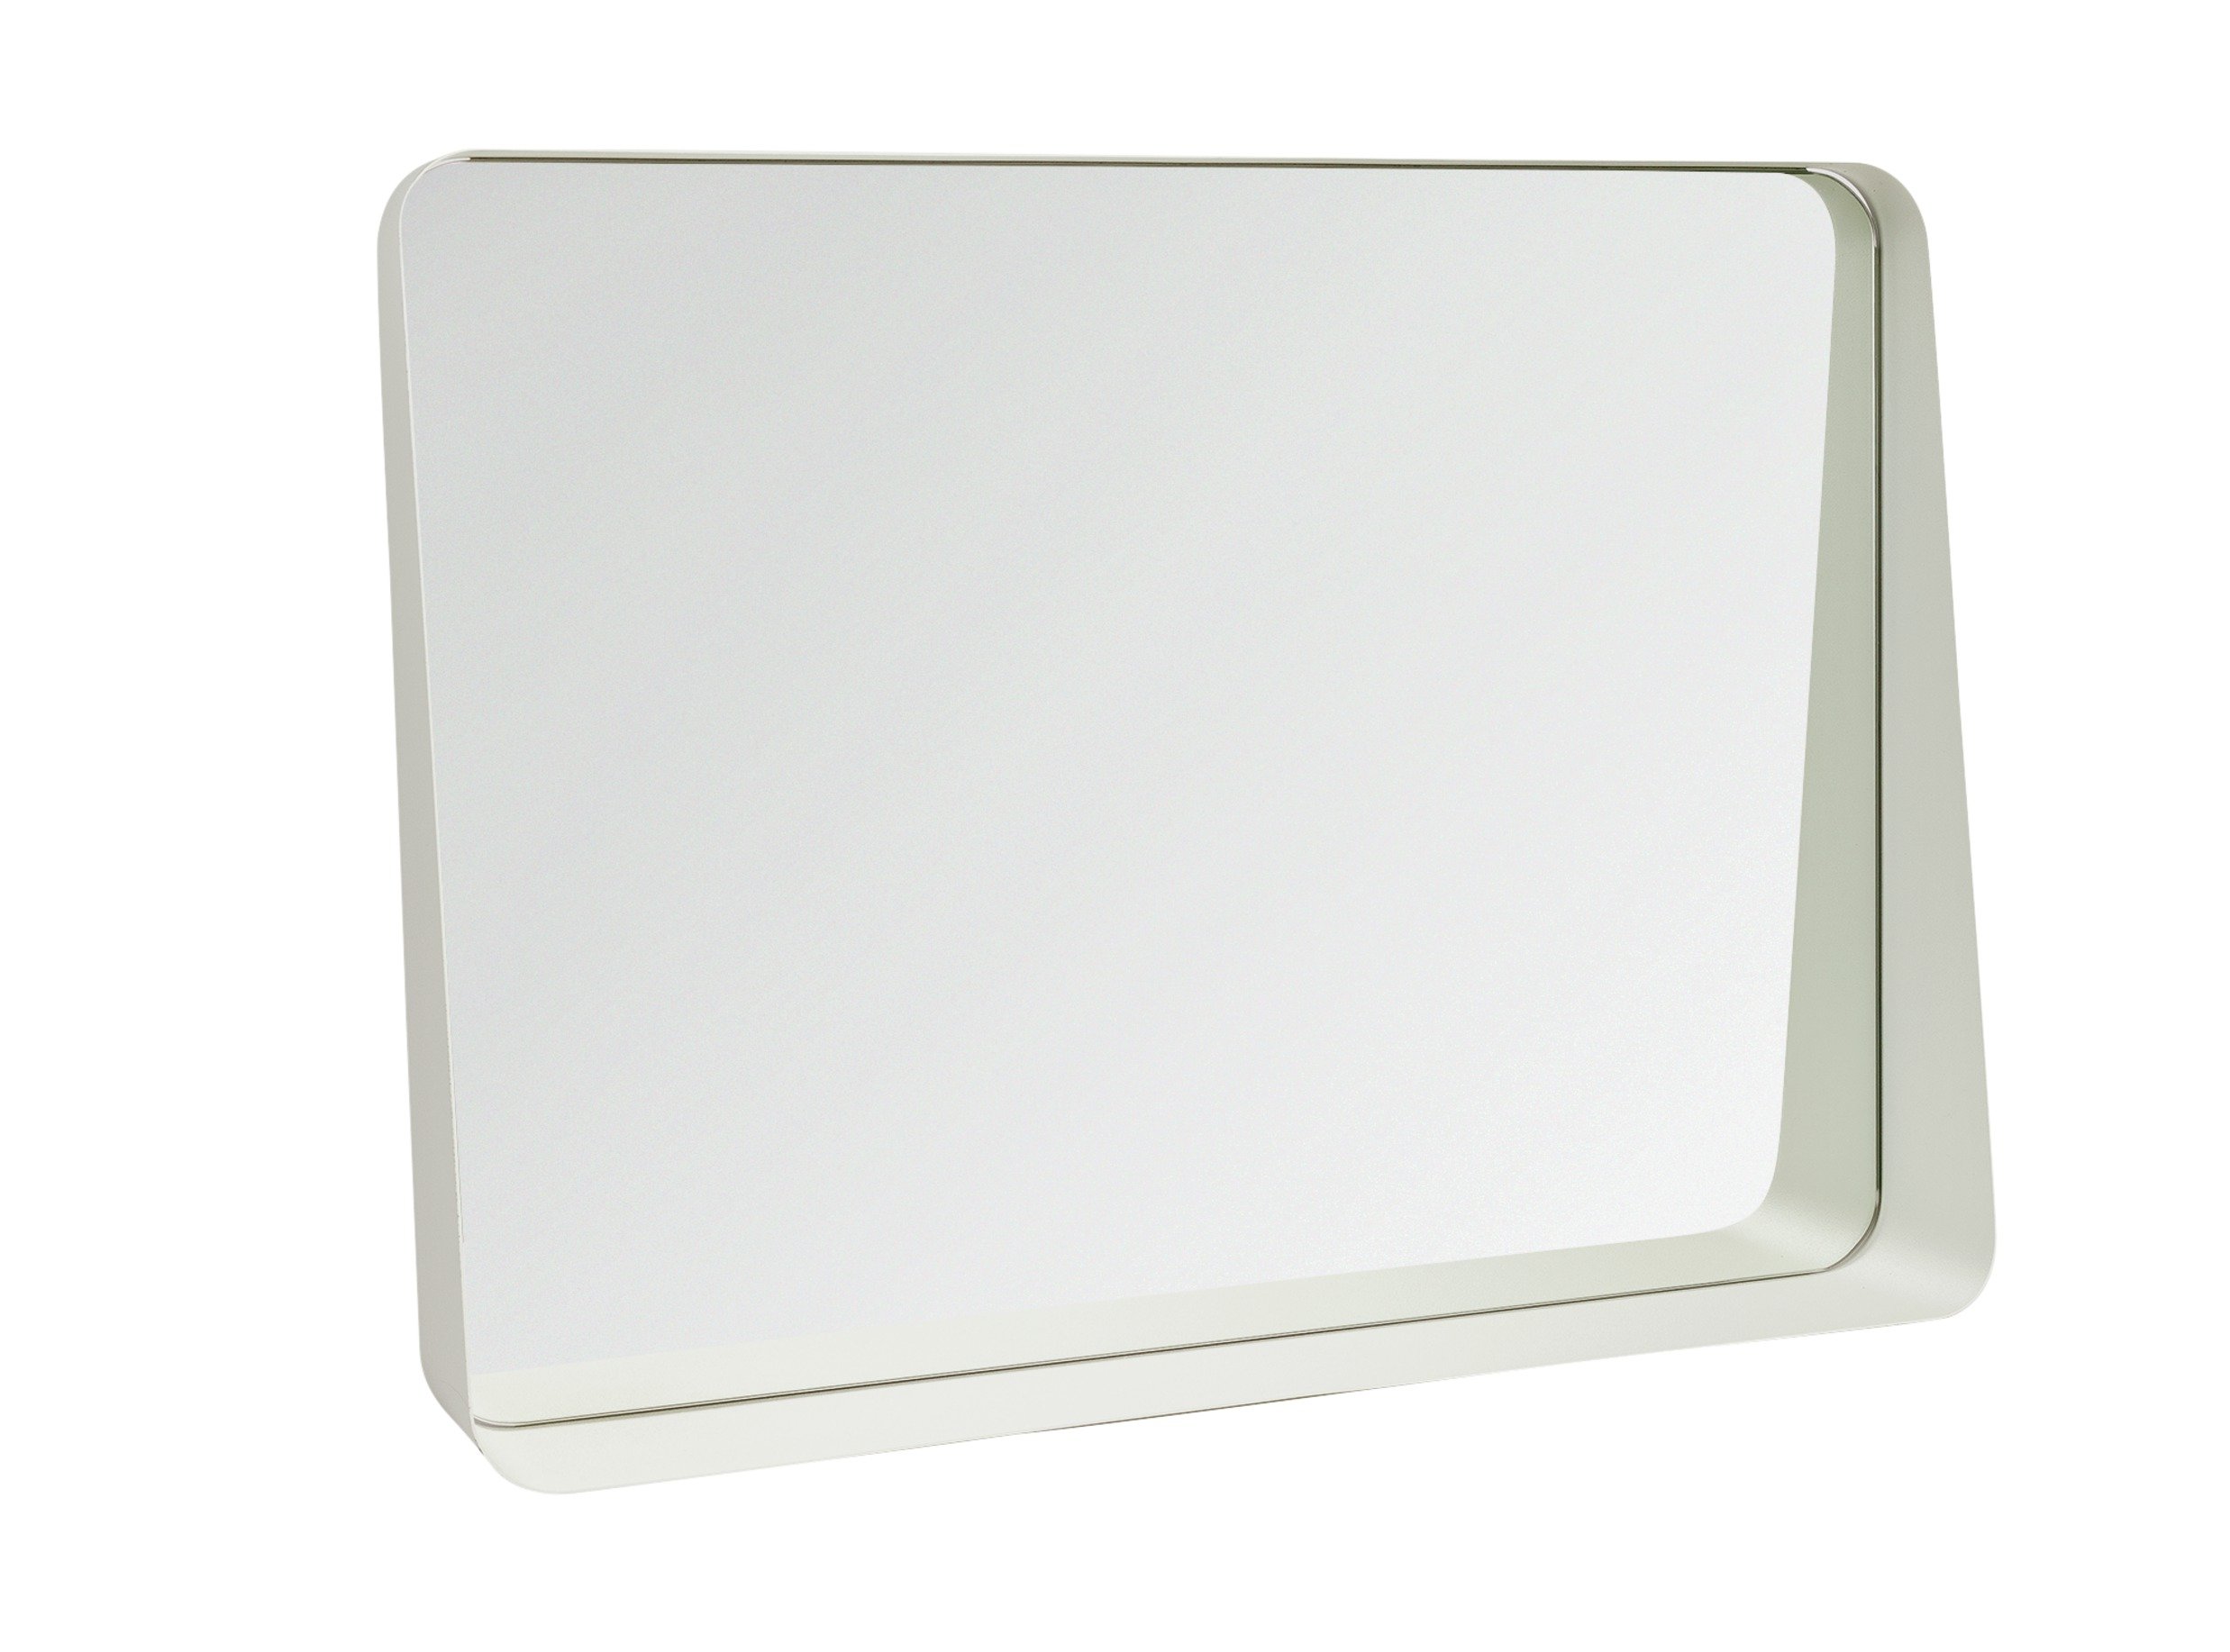 Hygena Aquarius Shelf Mirror - White